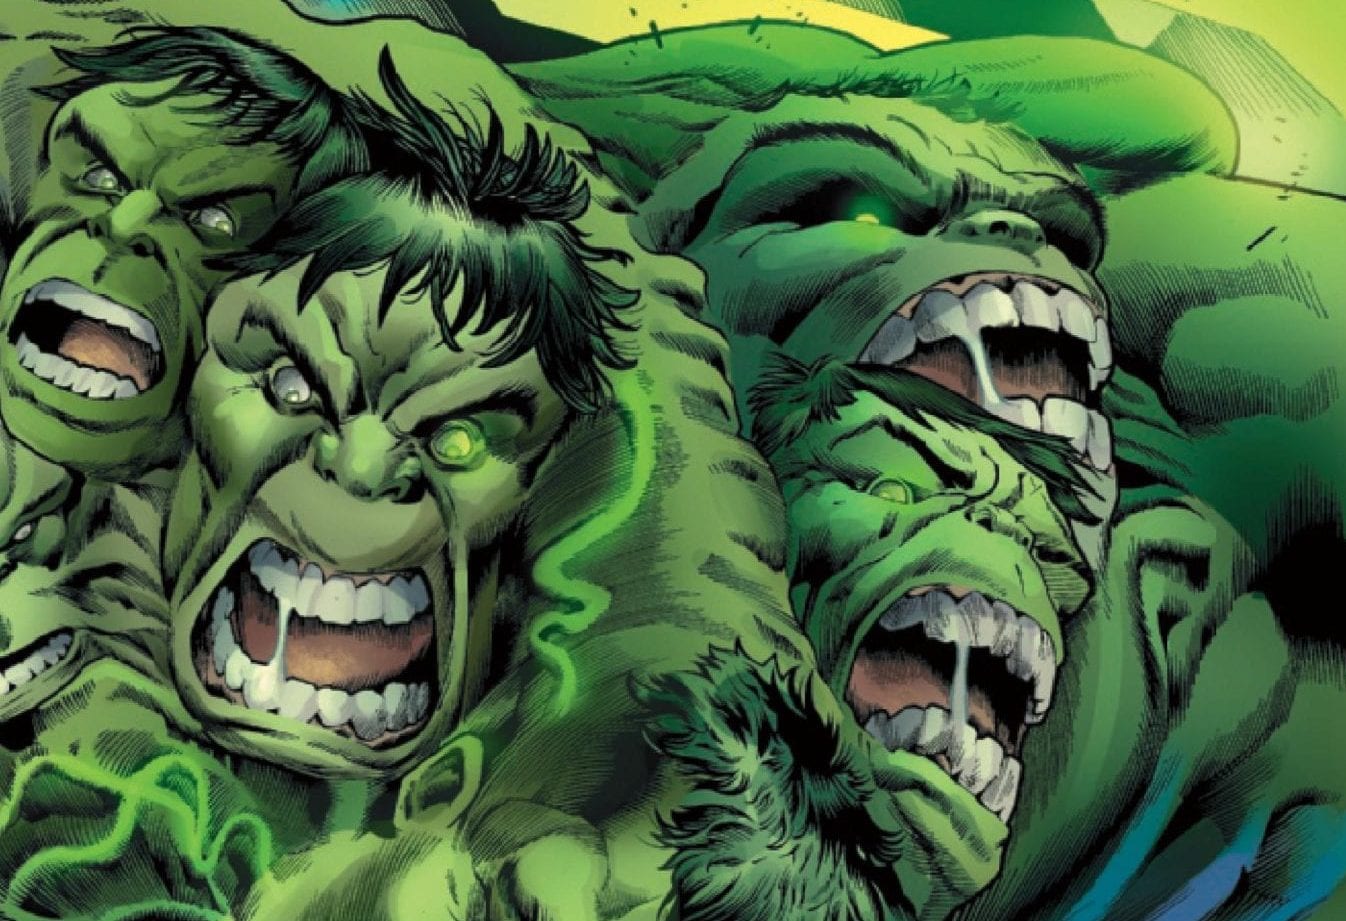 multiple Hulk personalities